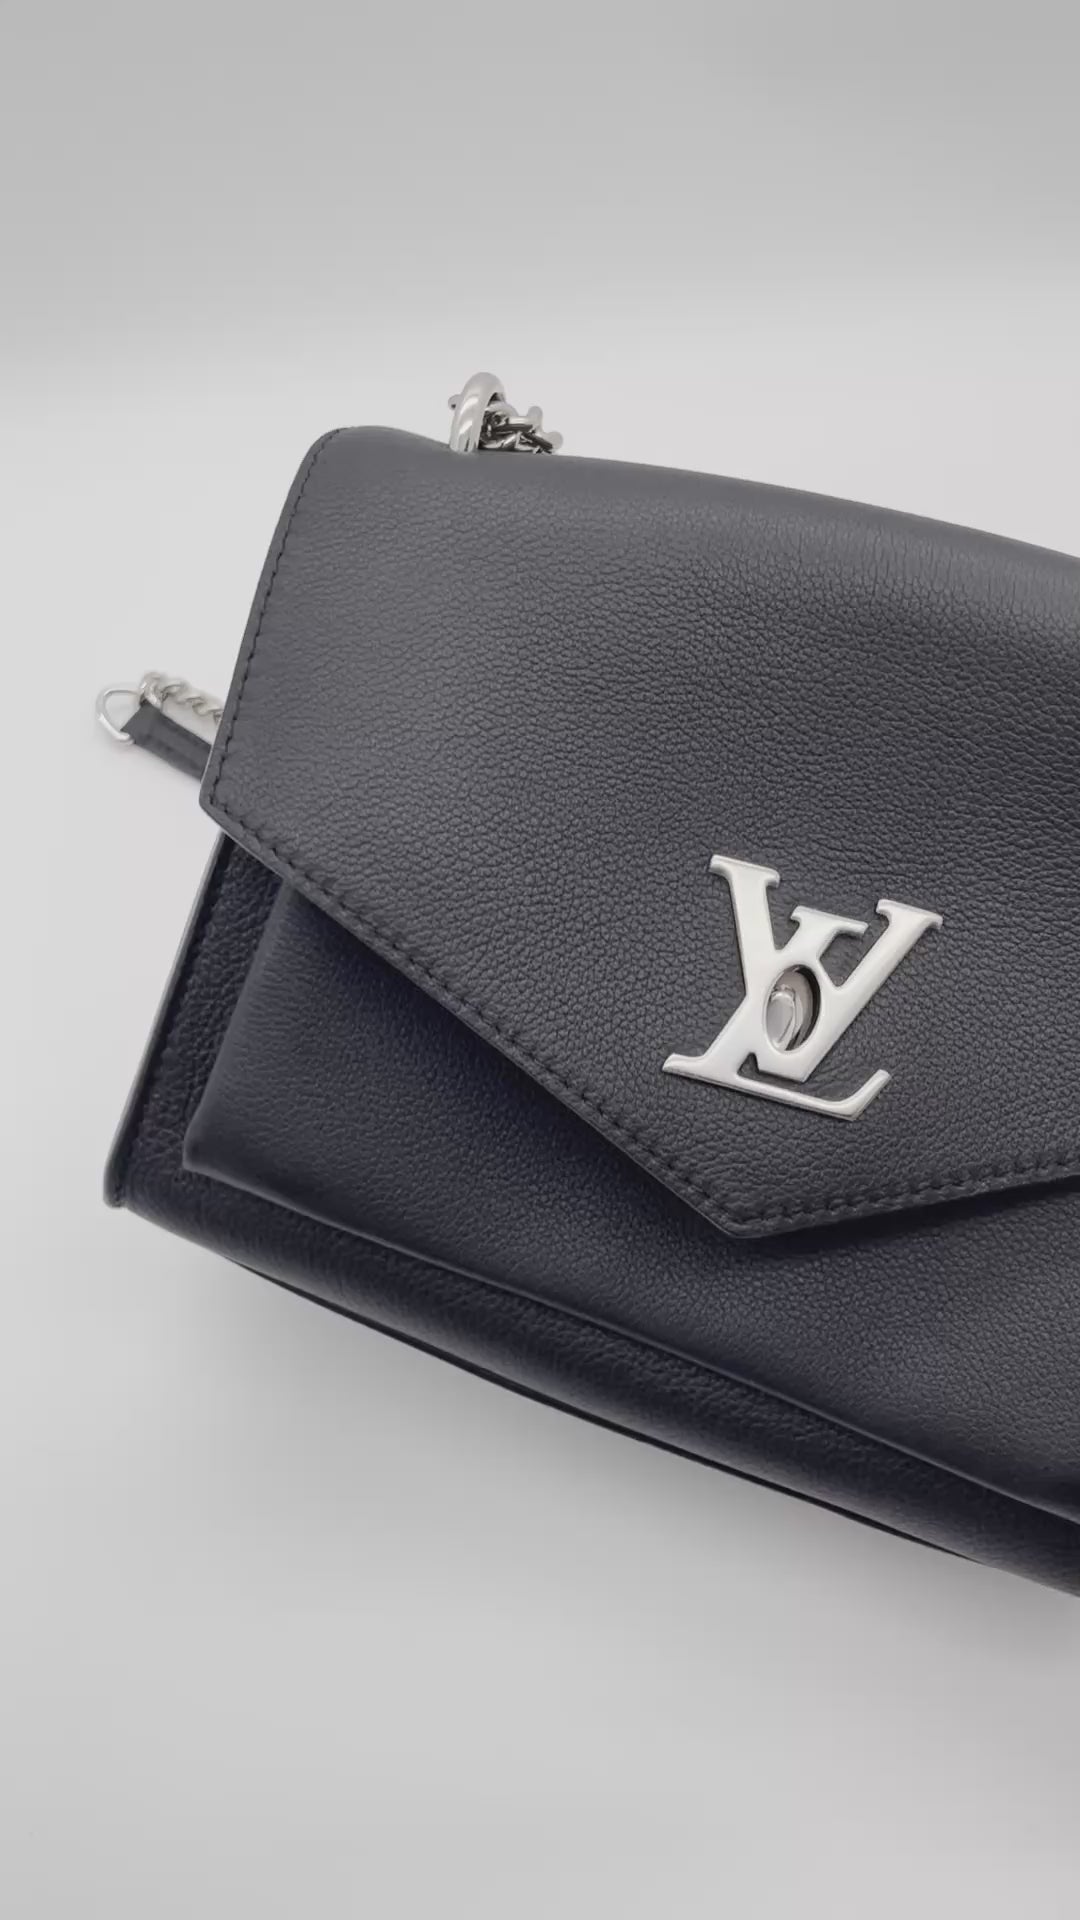 Louis Vuitton Lock Me Chain Bag Original Box & Receipt for Sale in